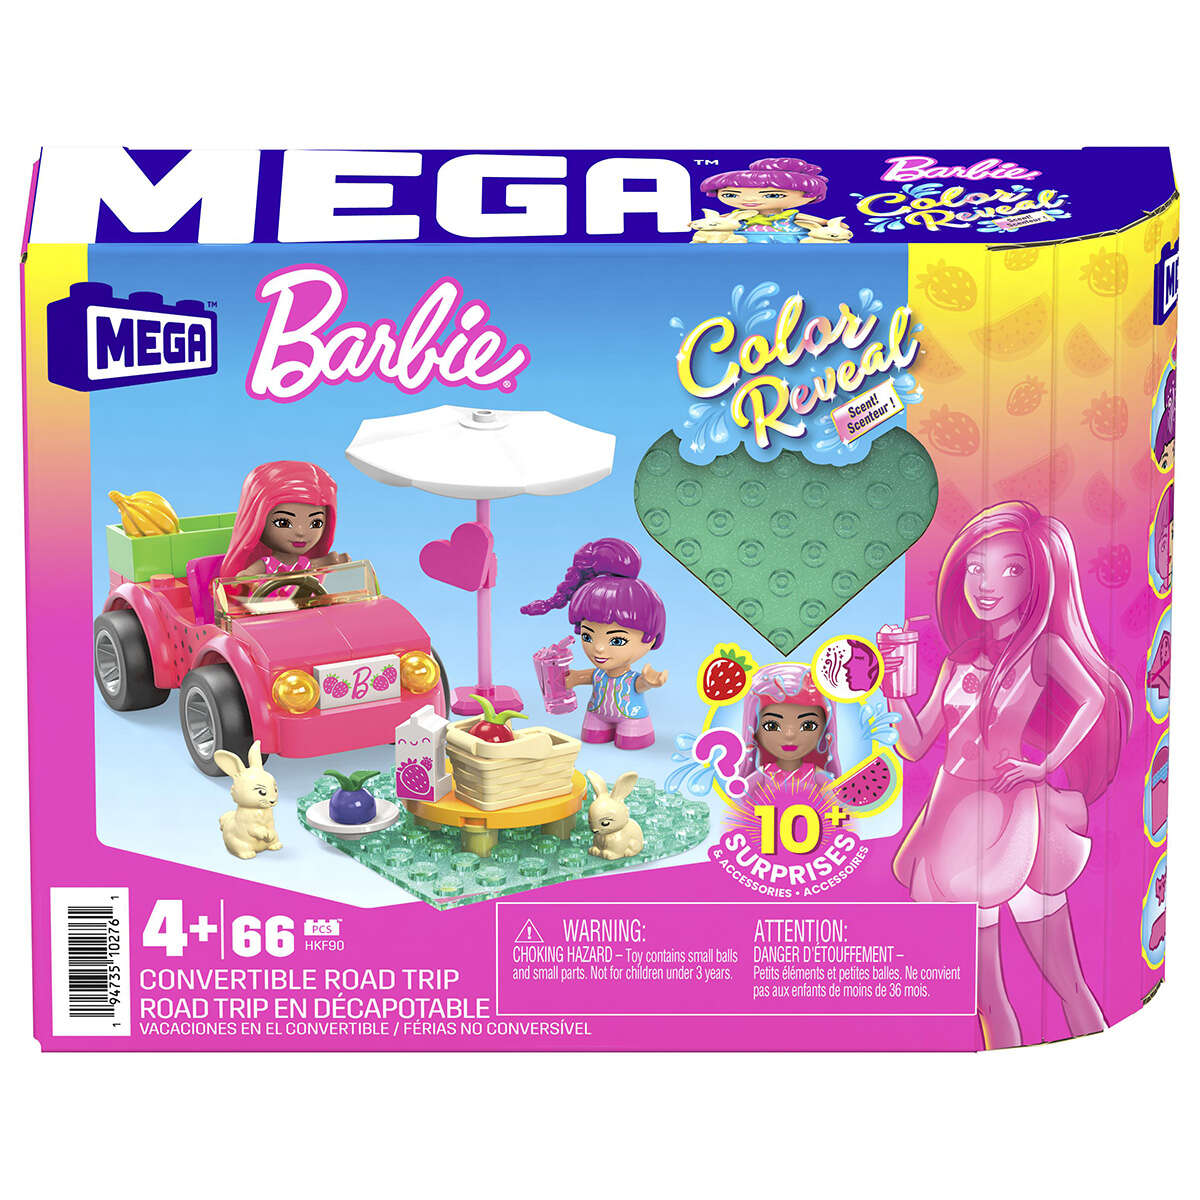 Set de joaca cu mini papusi surpriza, Mega Bloks, Barbie Color Reveal, Road Trip, HKF90